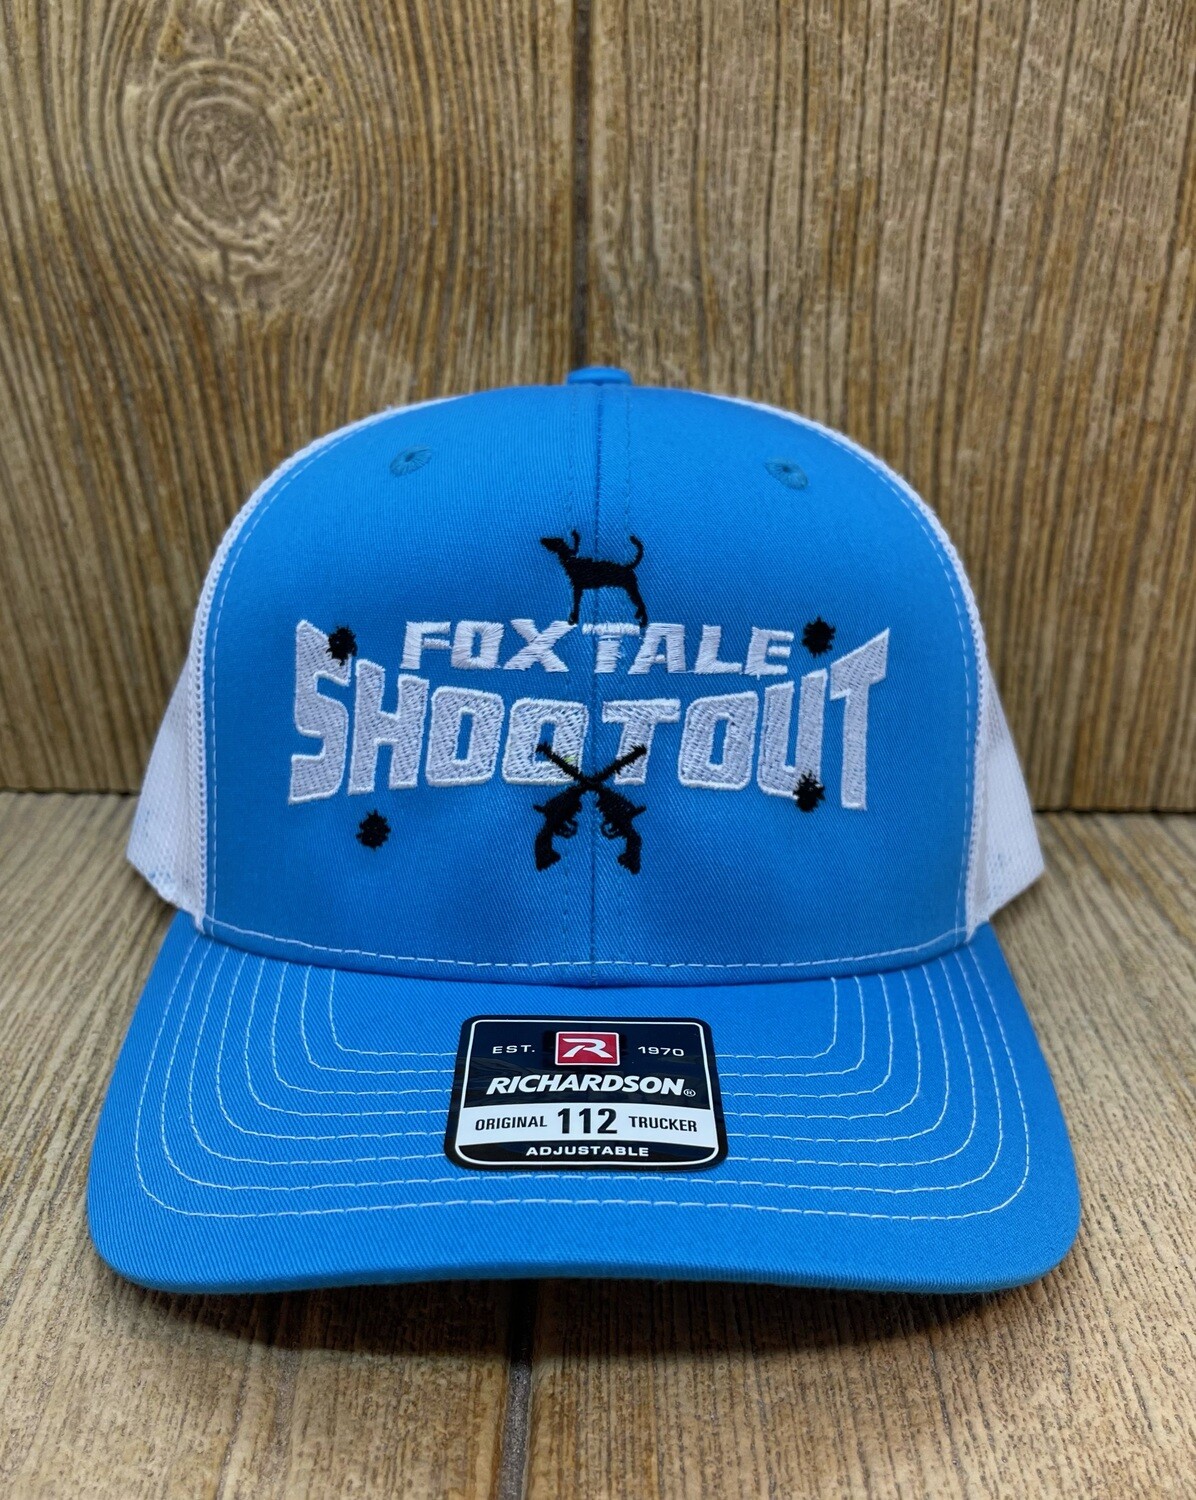 Fox Tale Shootout Adjustable Hat - Cyan/White